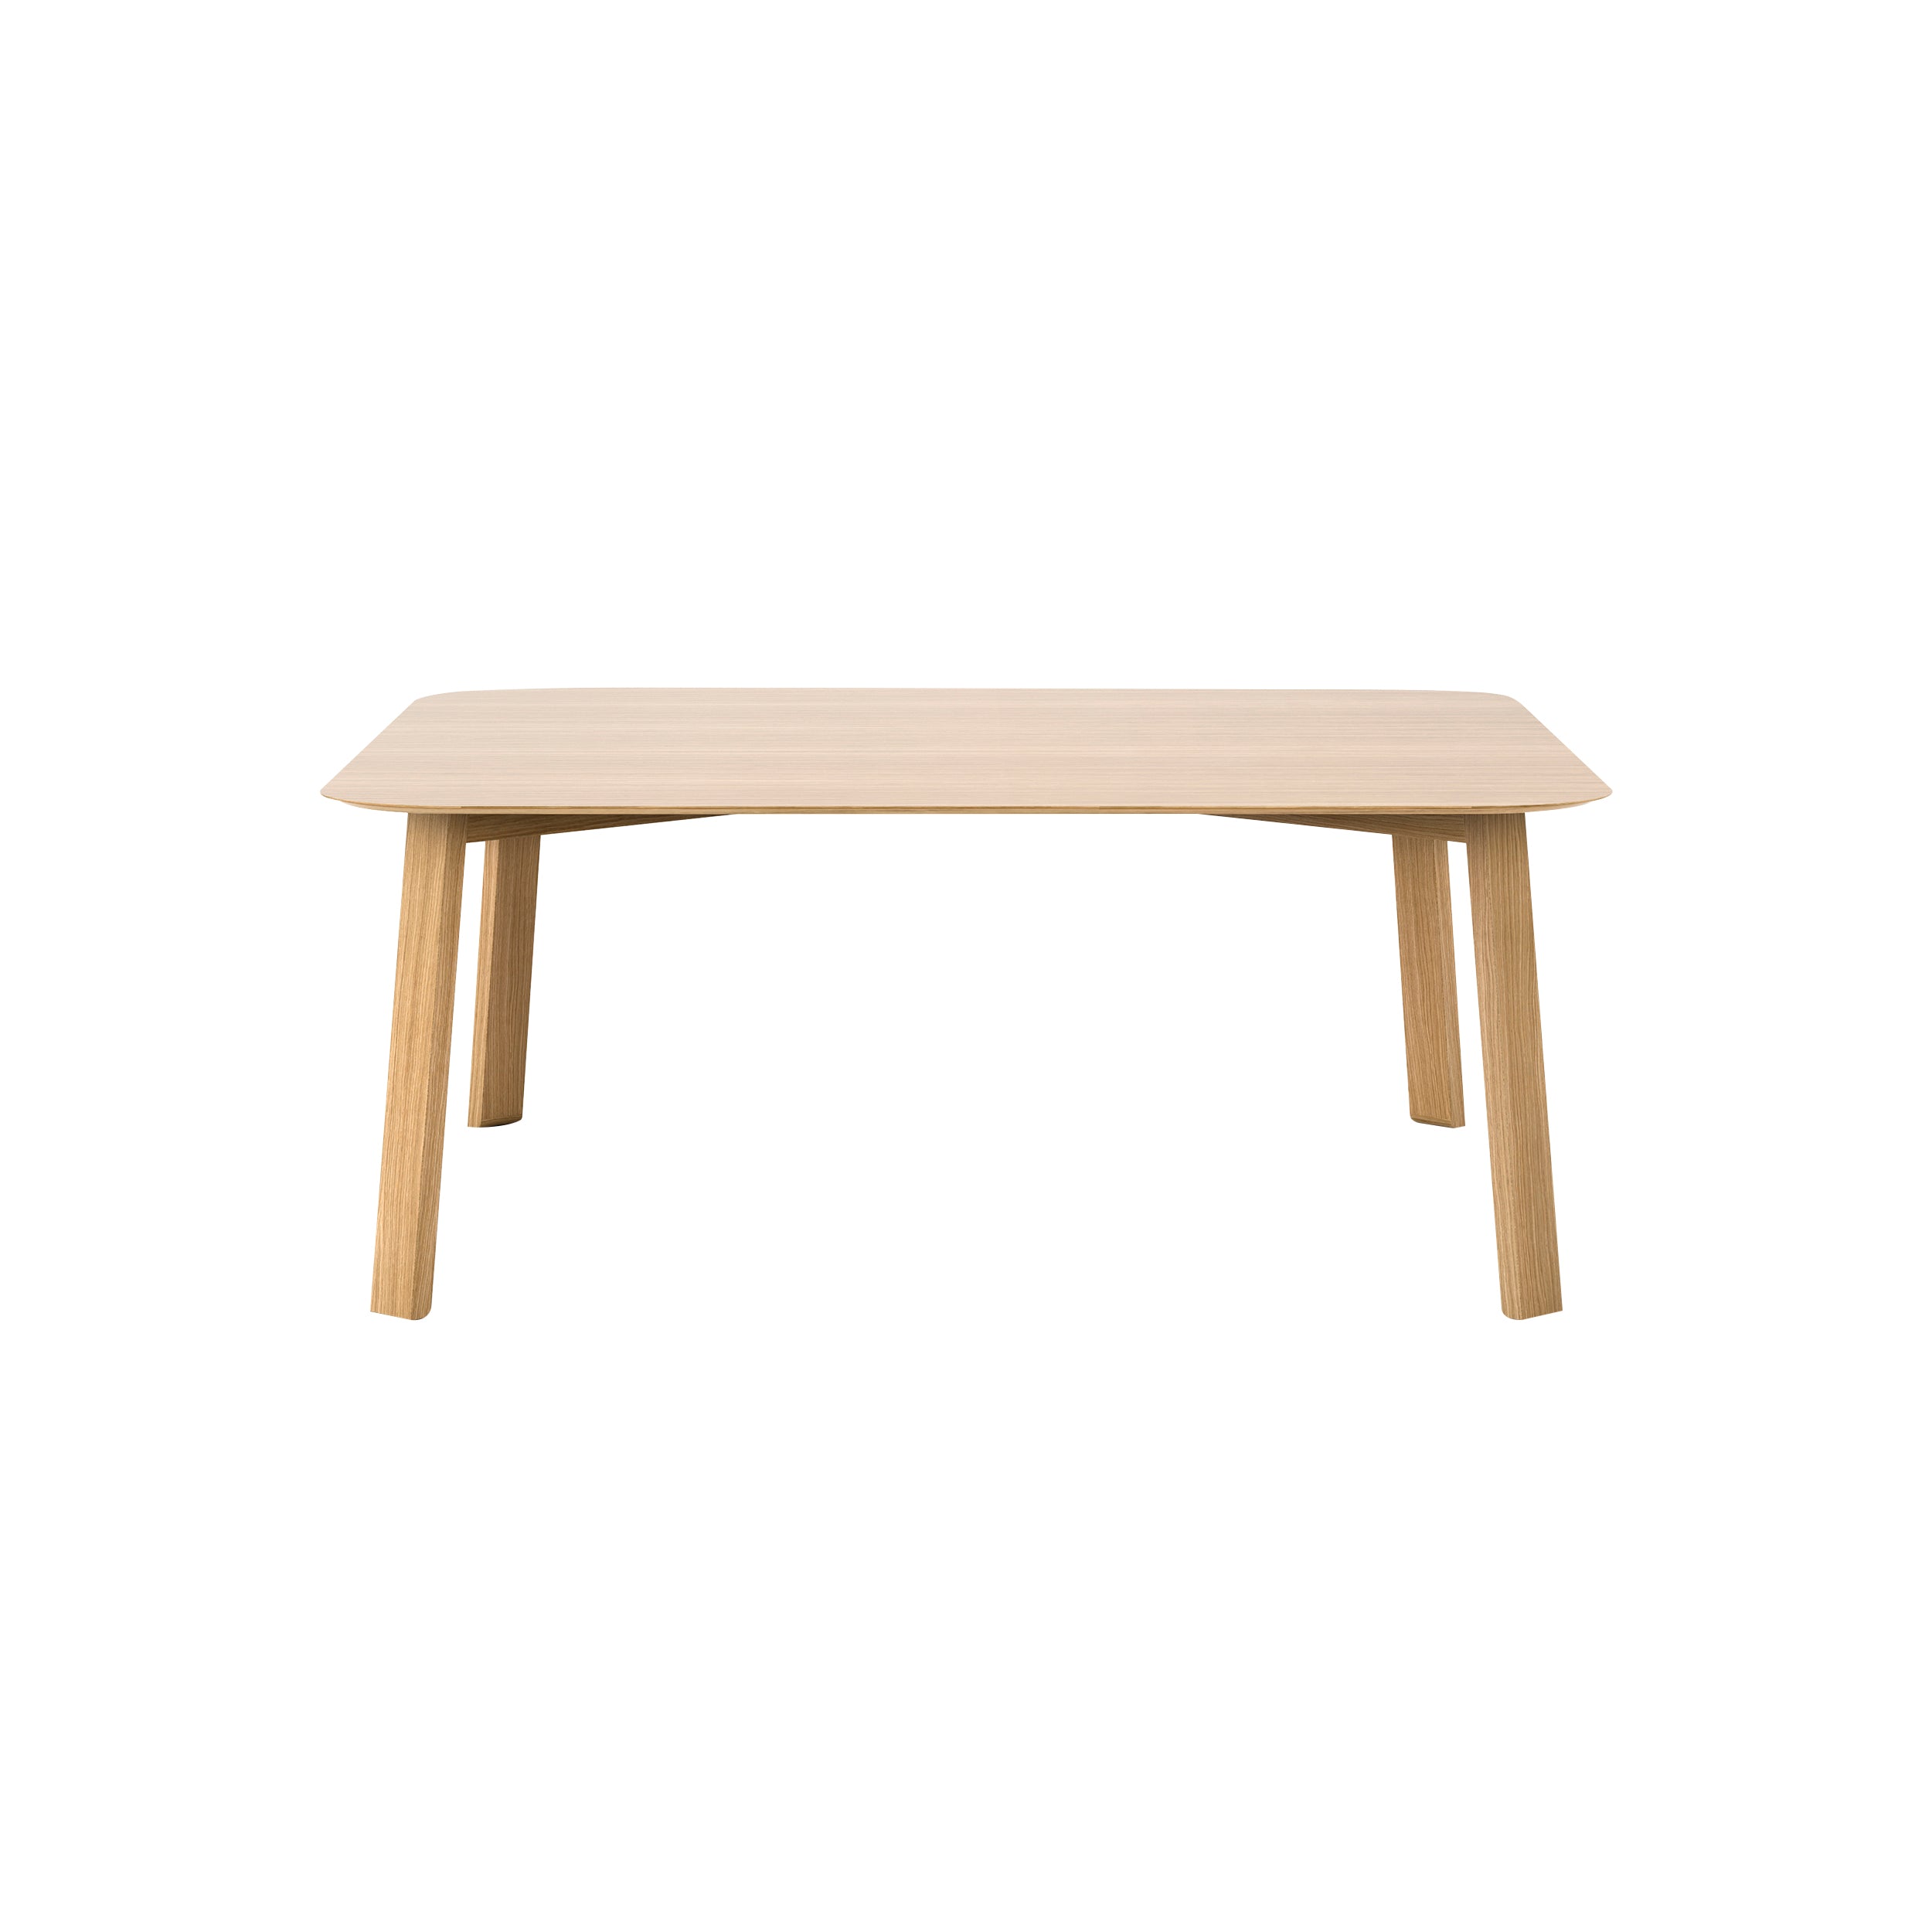 Stockholm Side Table: Square + Whitened Oak